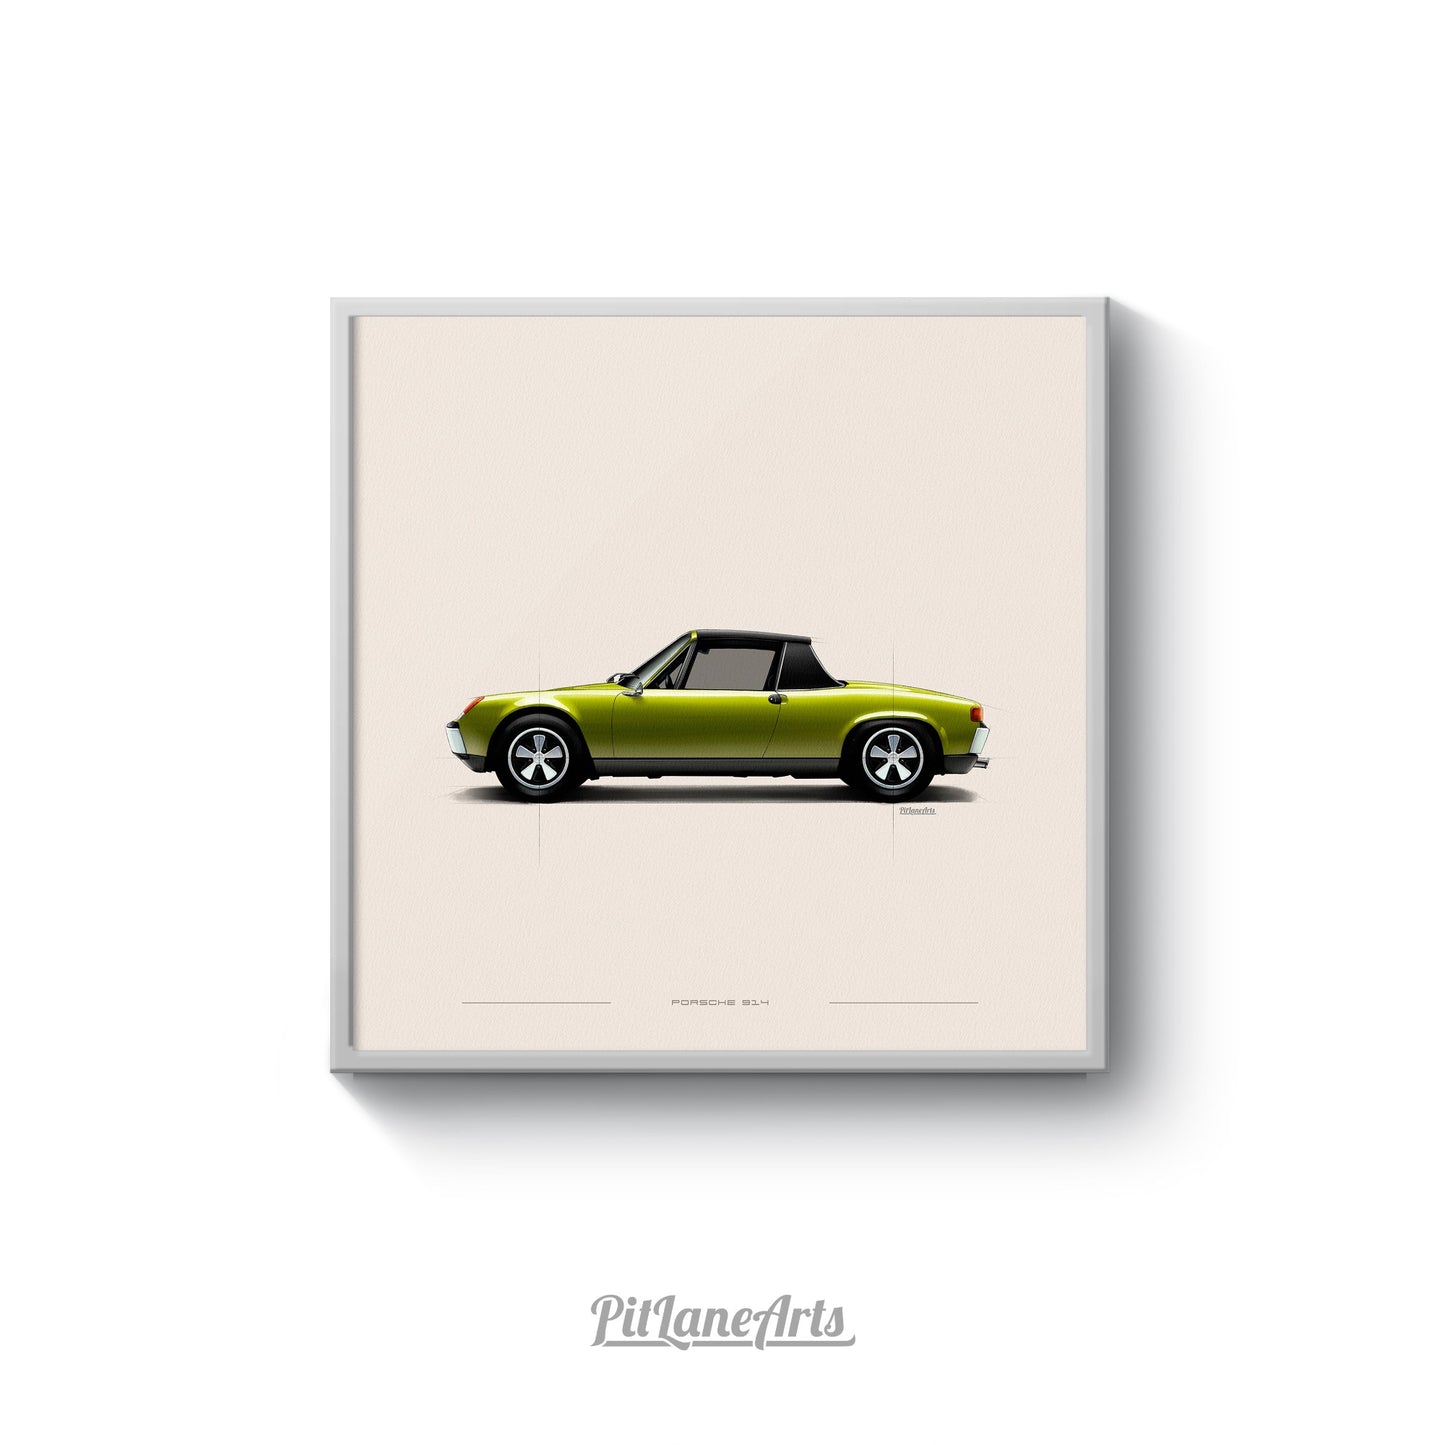 Porsche 914 print